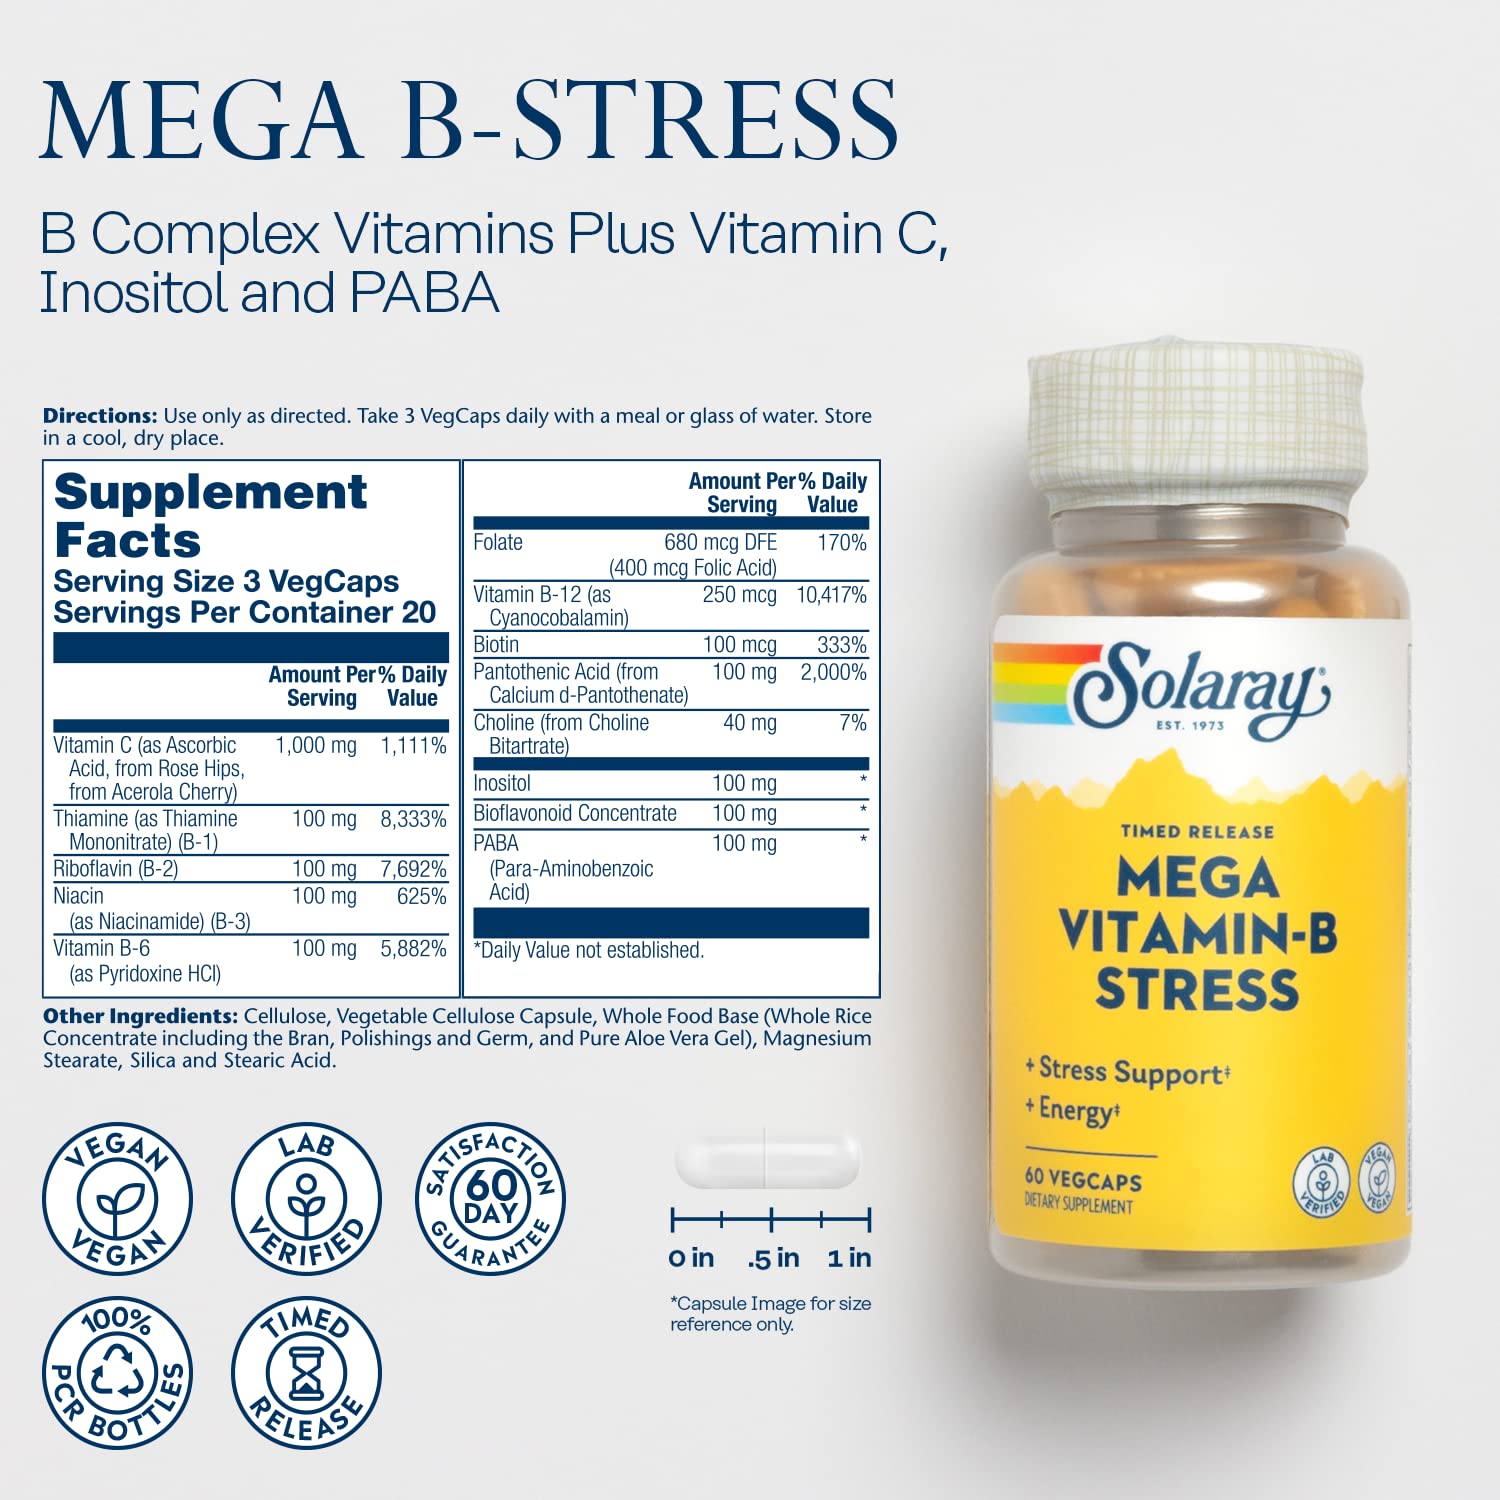 Solaray Mega B-Stress Timed-Release 60ct VegCap